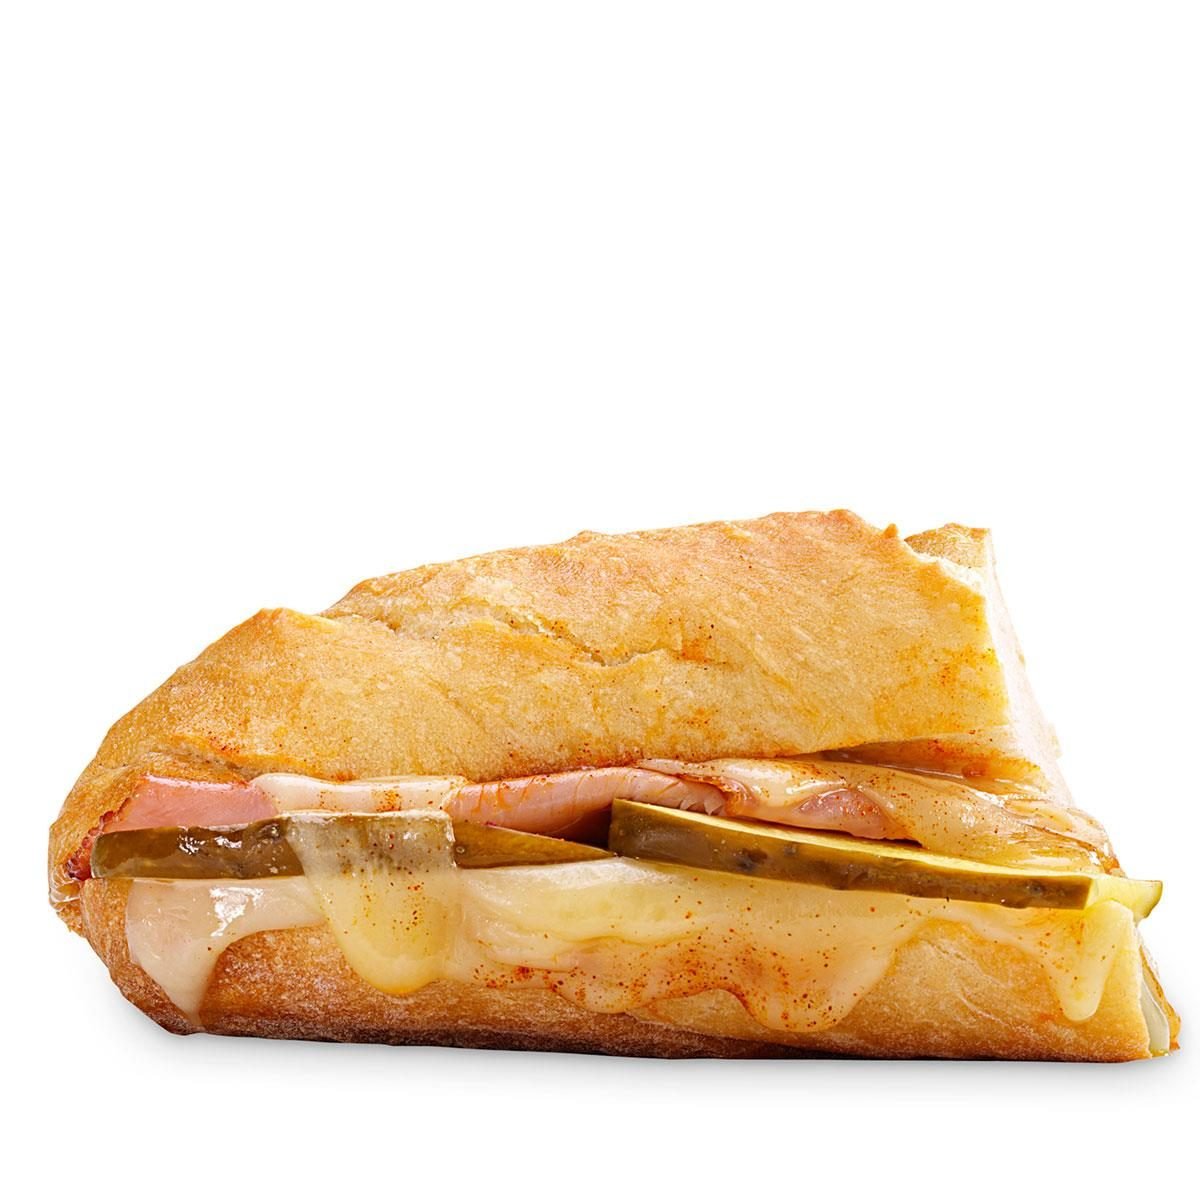 Inspired by: Ham & Swiss Cafe Sandwich